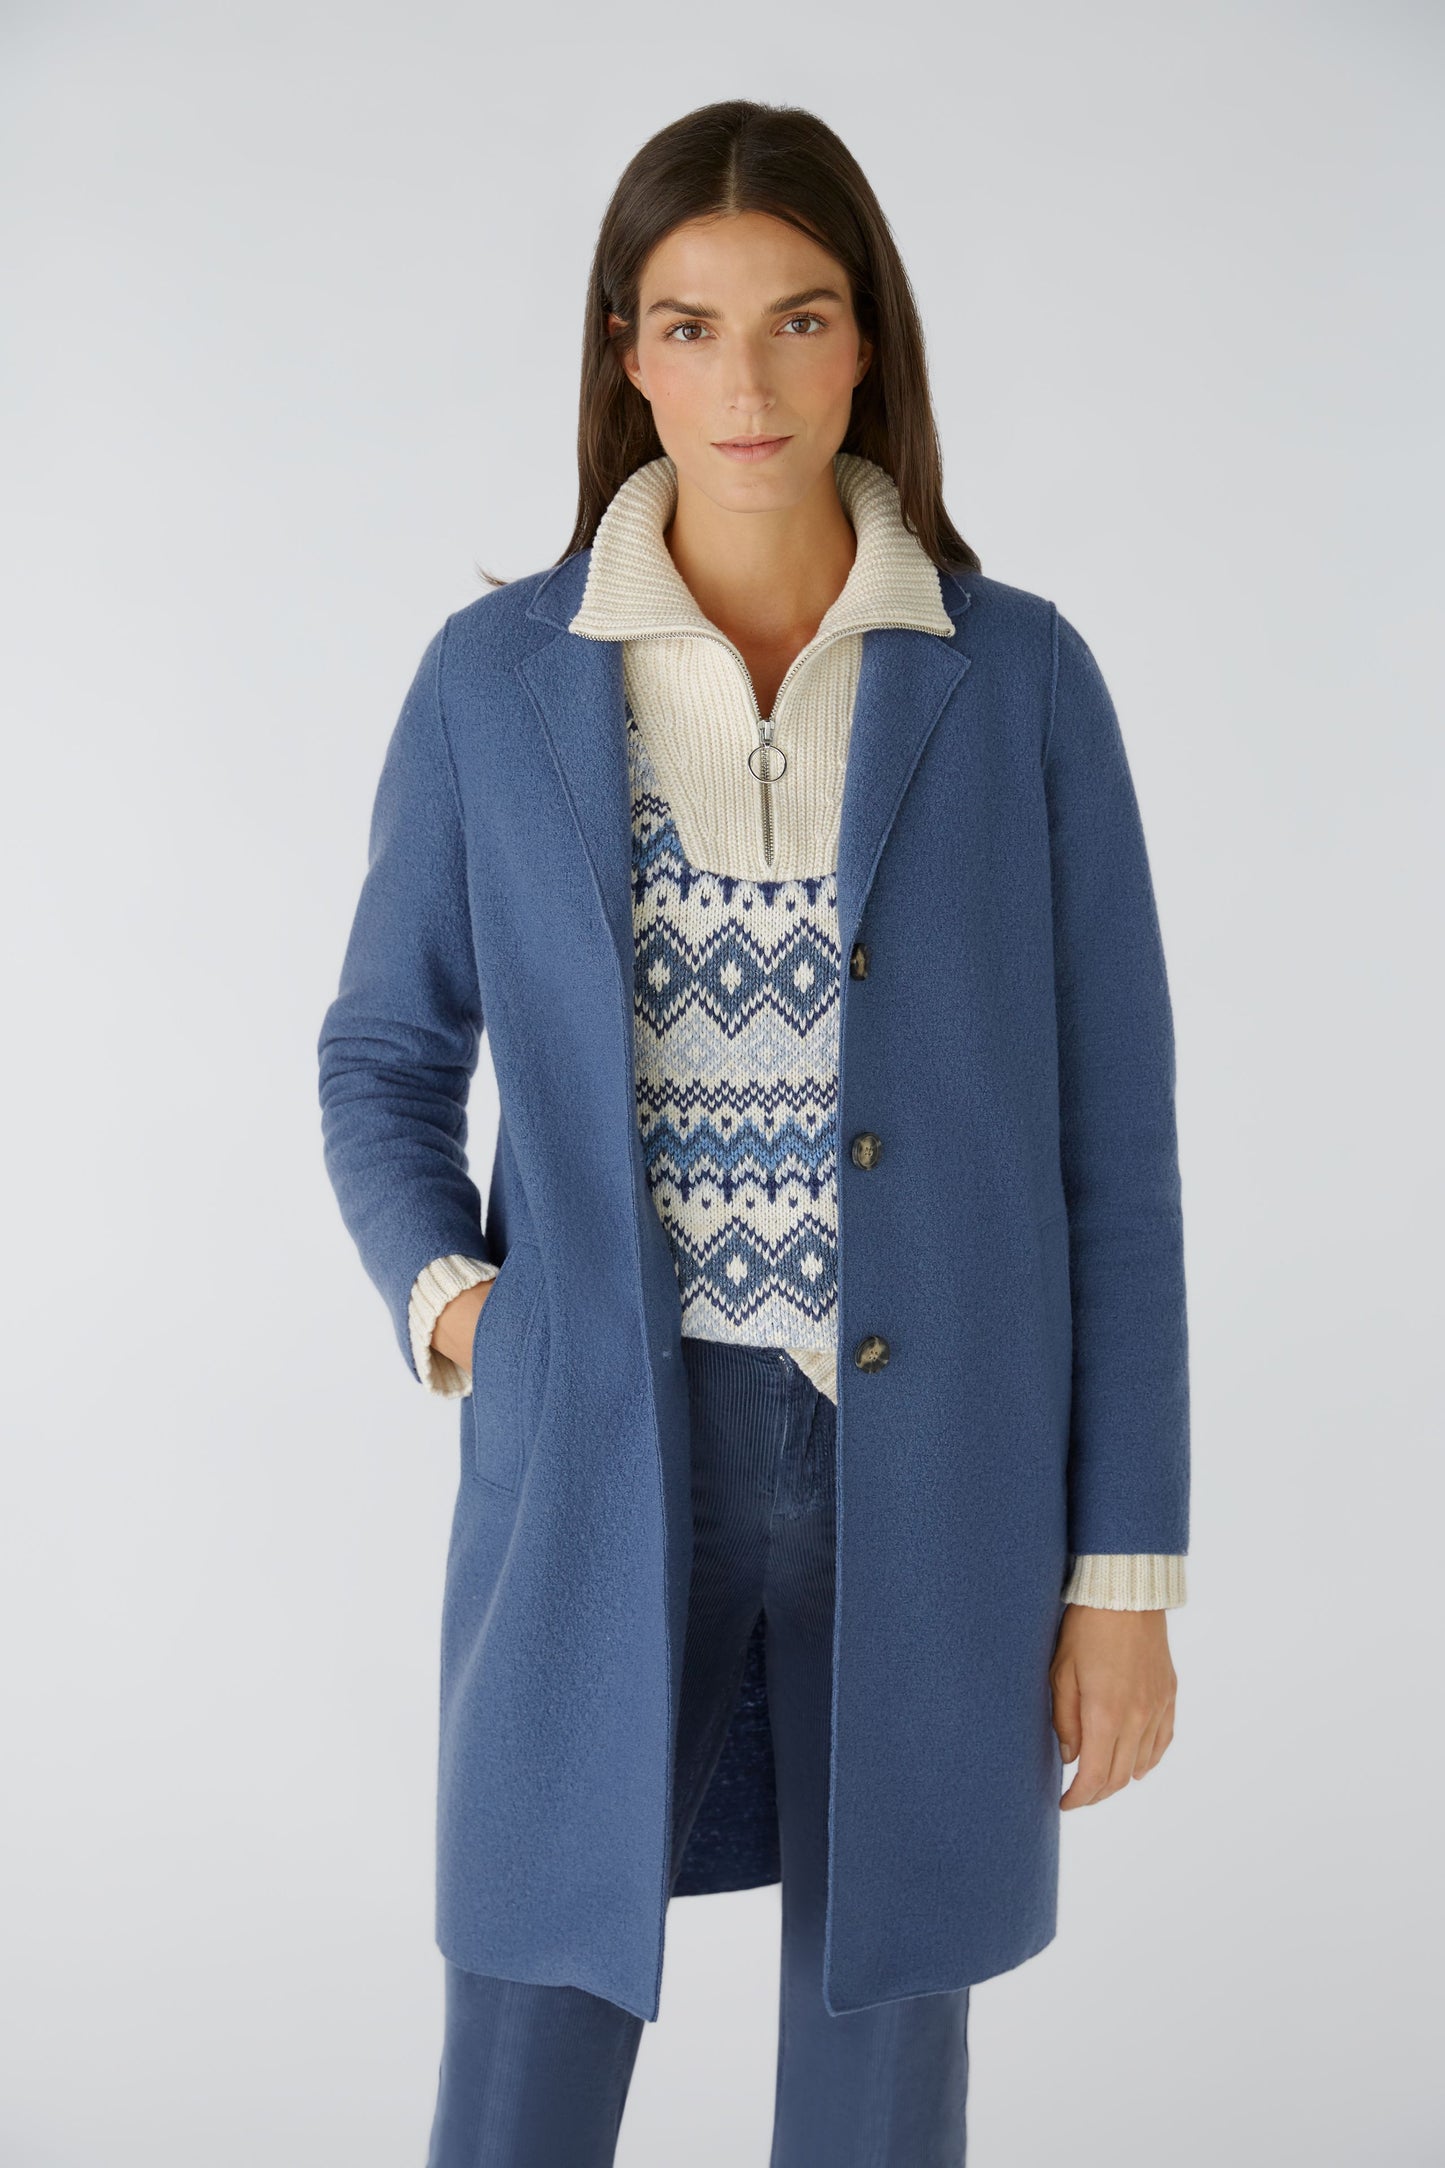 Oui Denim Blue Boiled Wool Coat